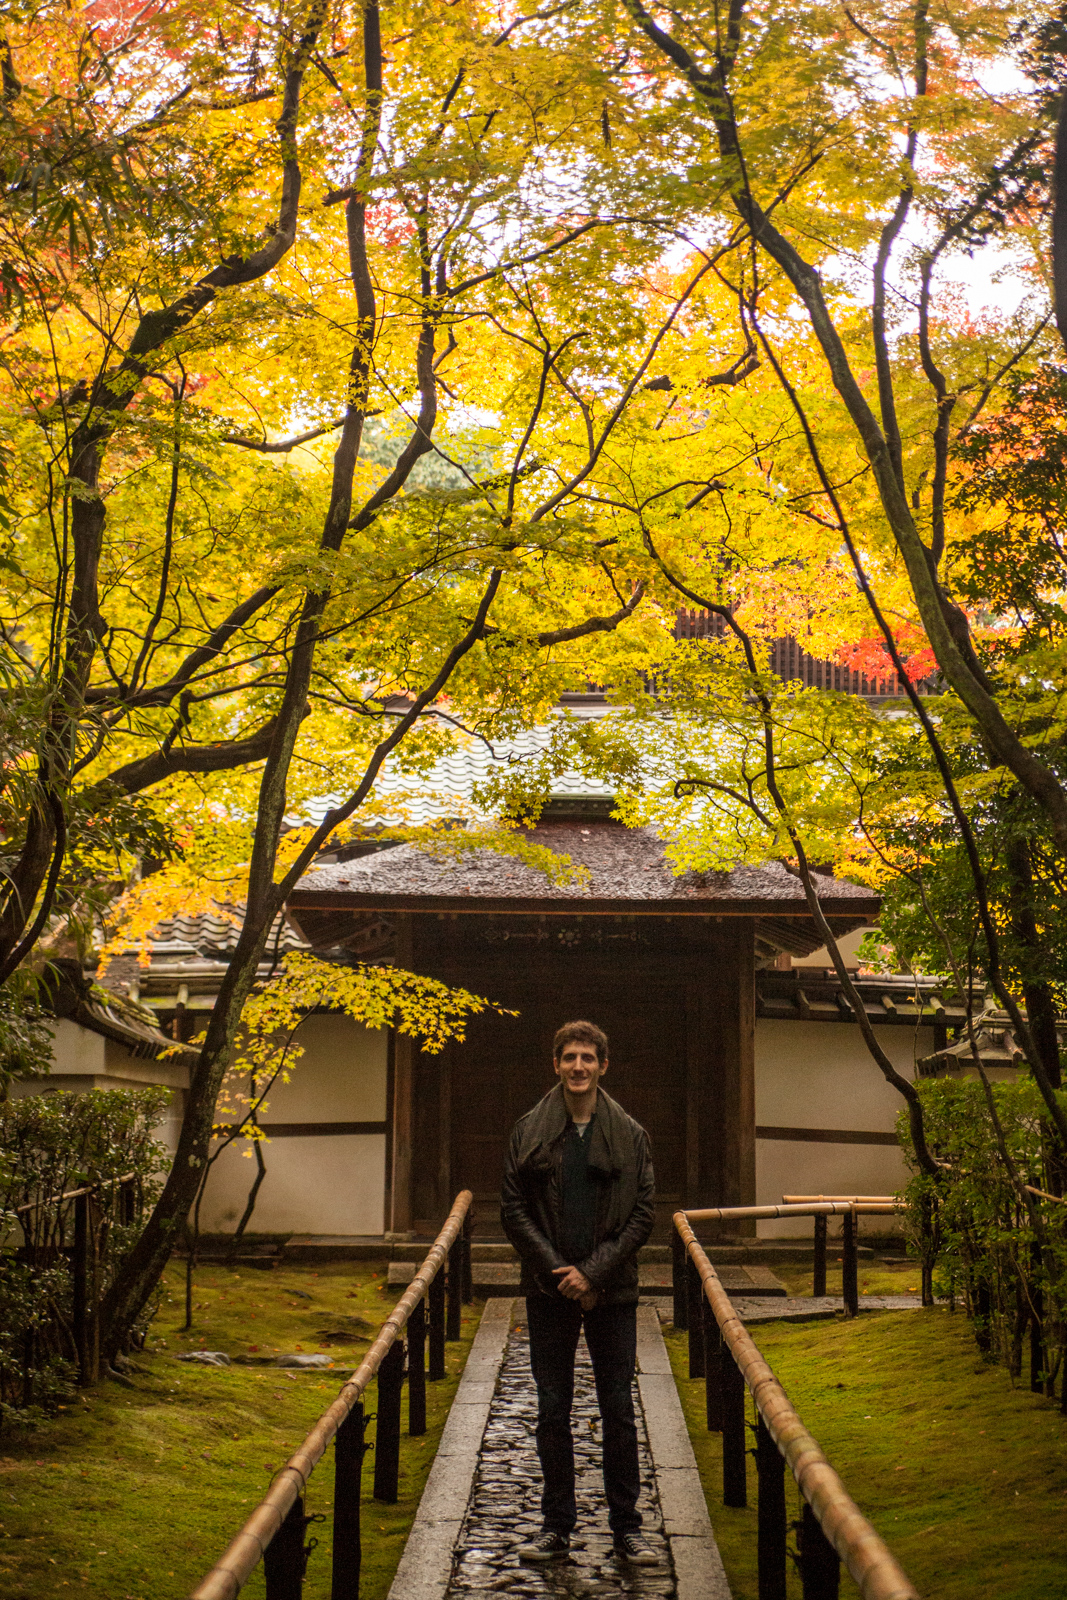 Kyoto, momiji kyoto, voyage kyoto, séjour kyoto, kyoto automne, kyoto fall, kyoto autumn, kyoto érables